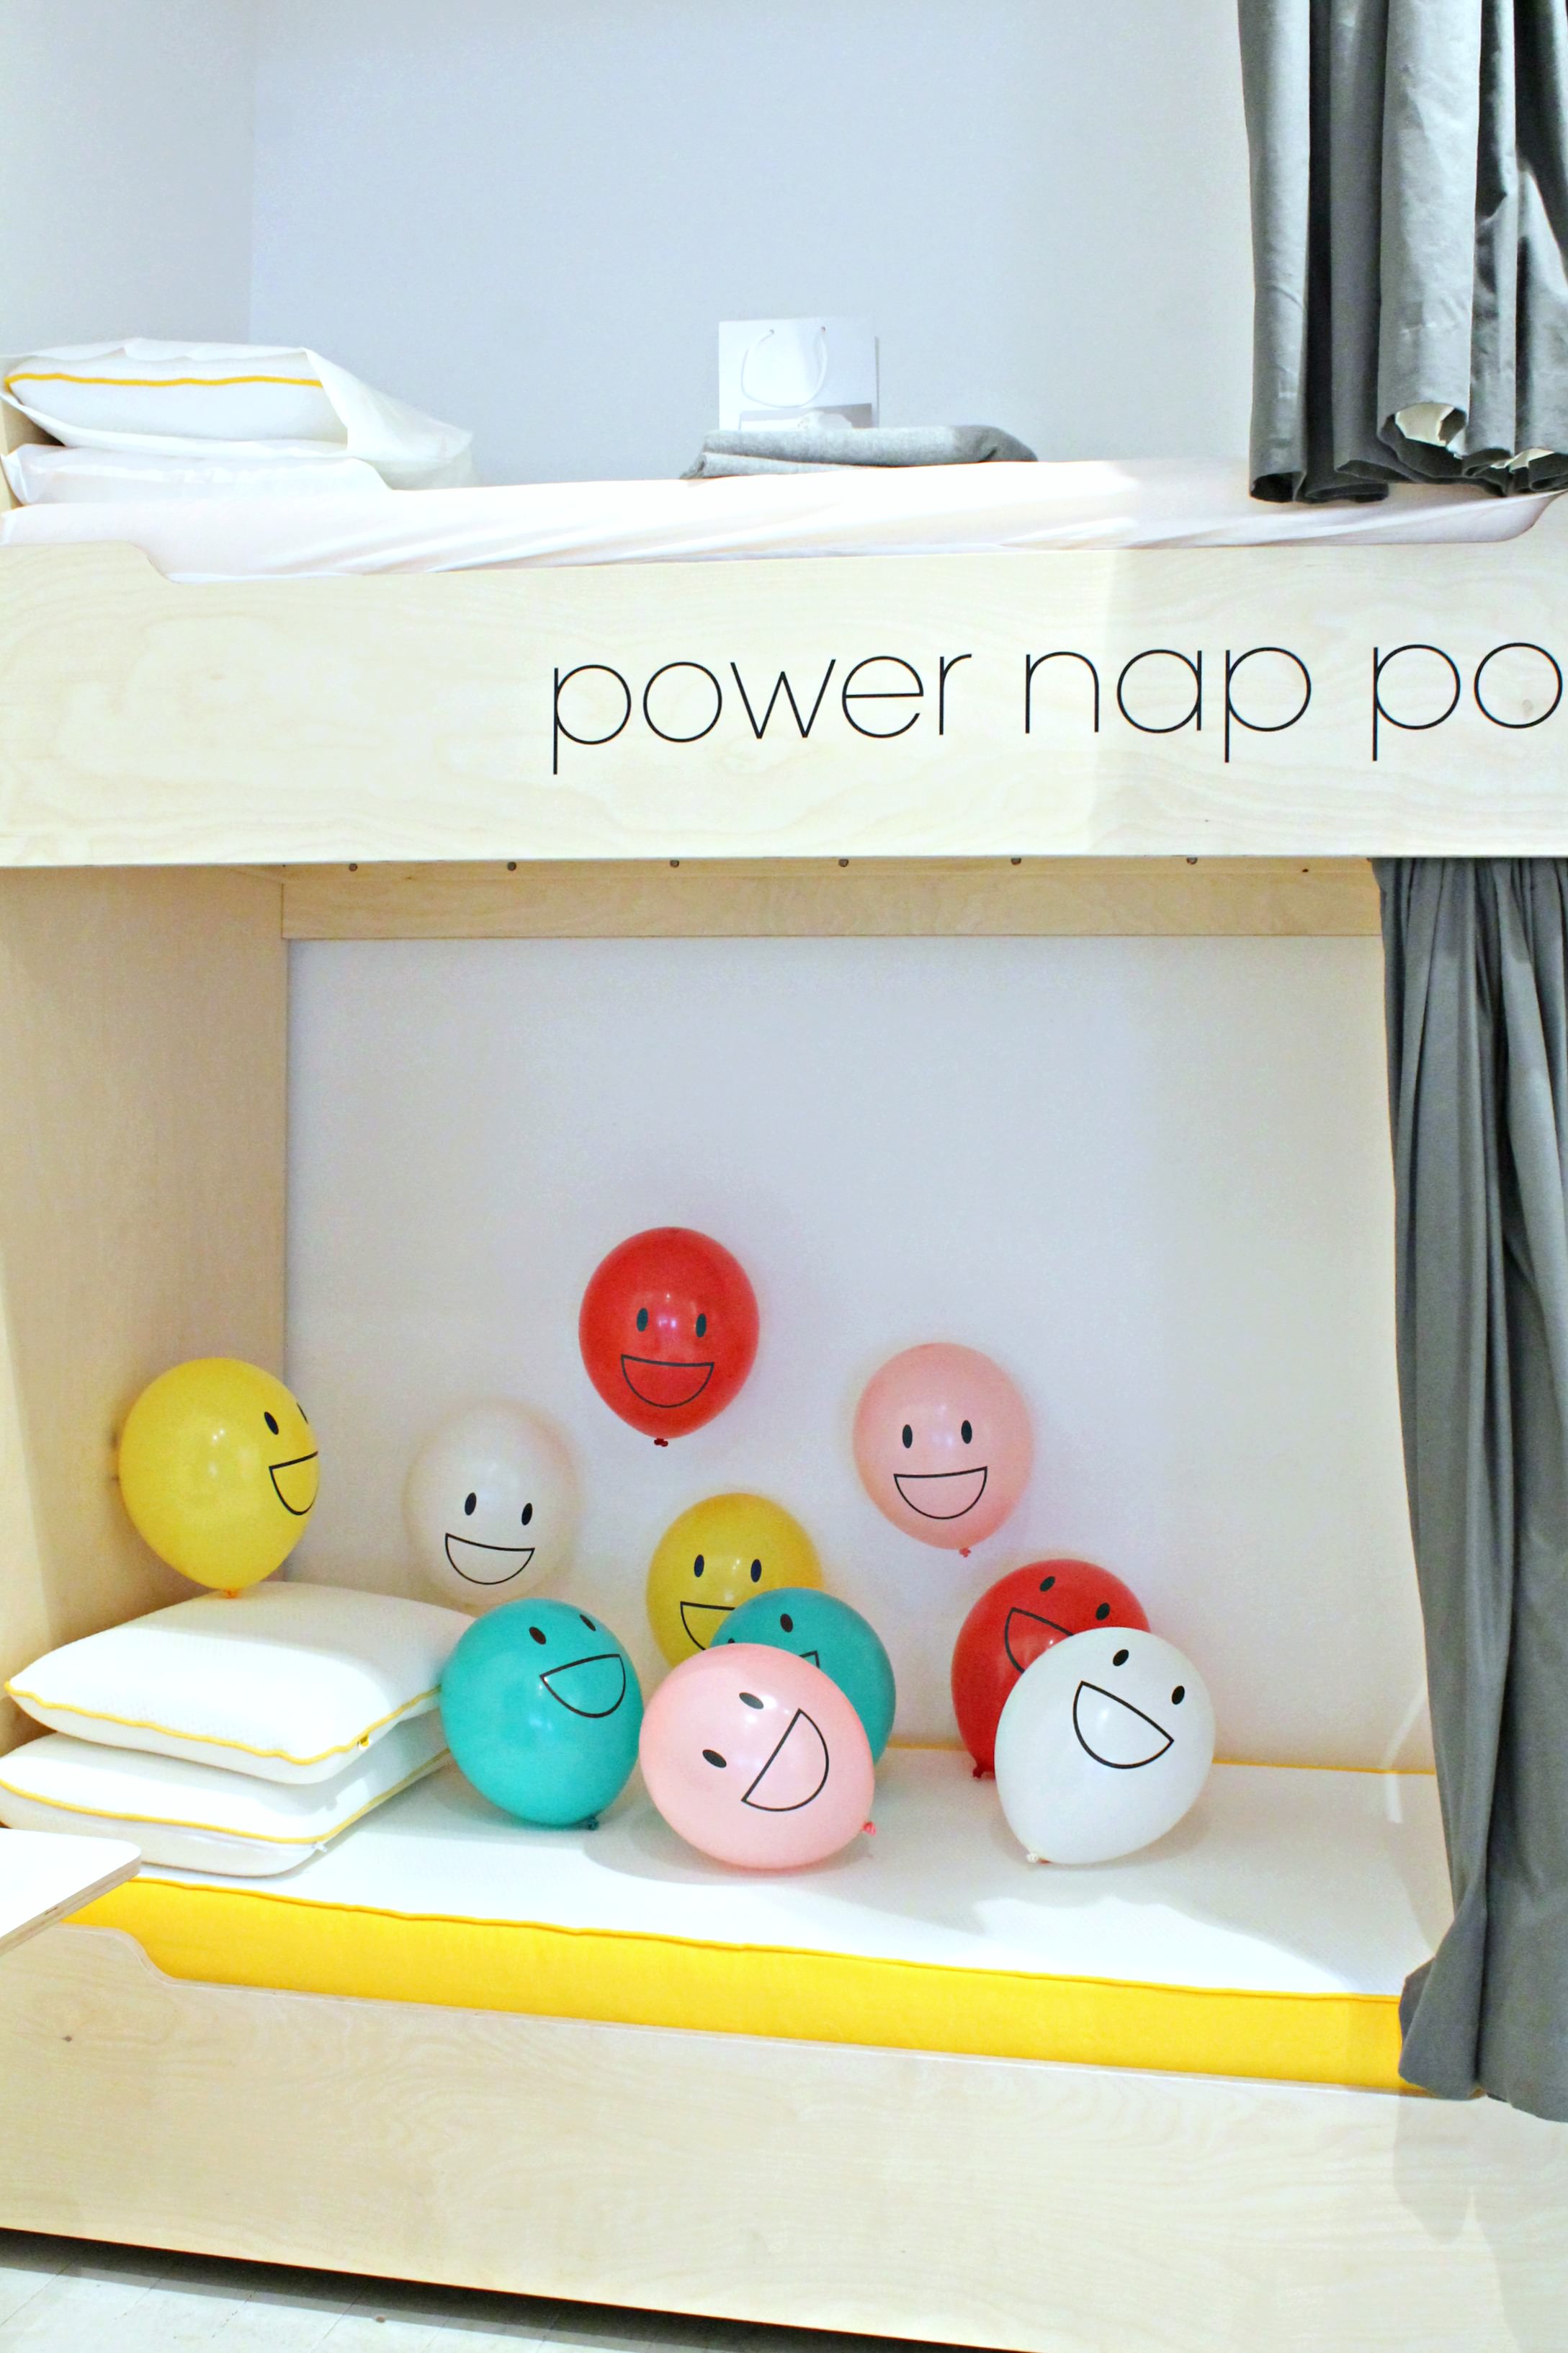 Eve-sleep-power-nap-pod-photo-by-Little-Big-Bell